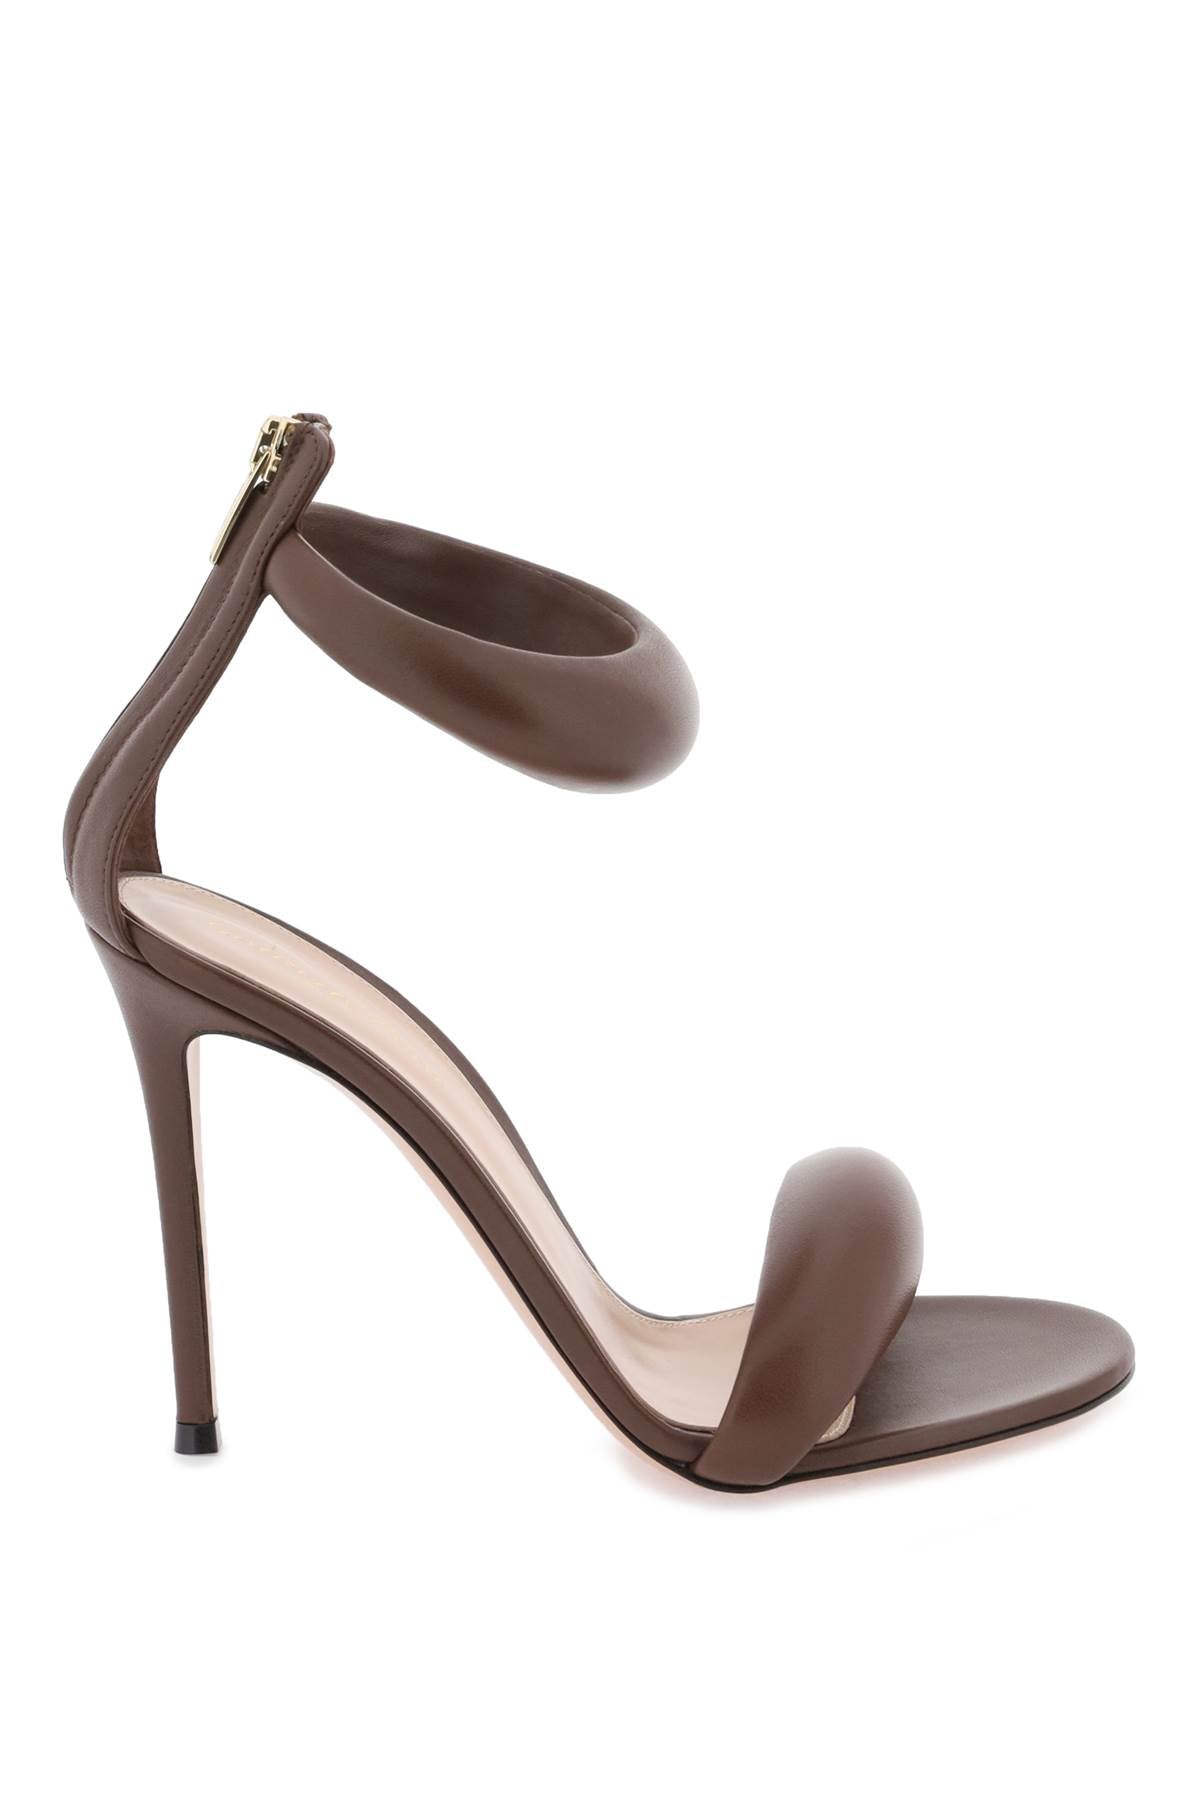 Gianvito rossi bijoux sandals-women > shoes > sandals-Gianvito Rossi-Urbanheer